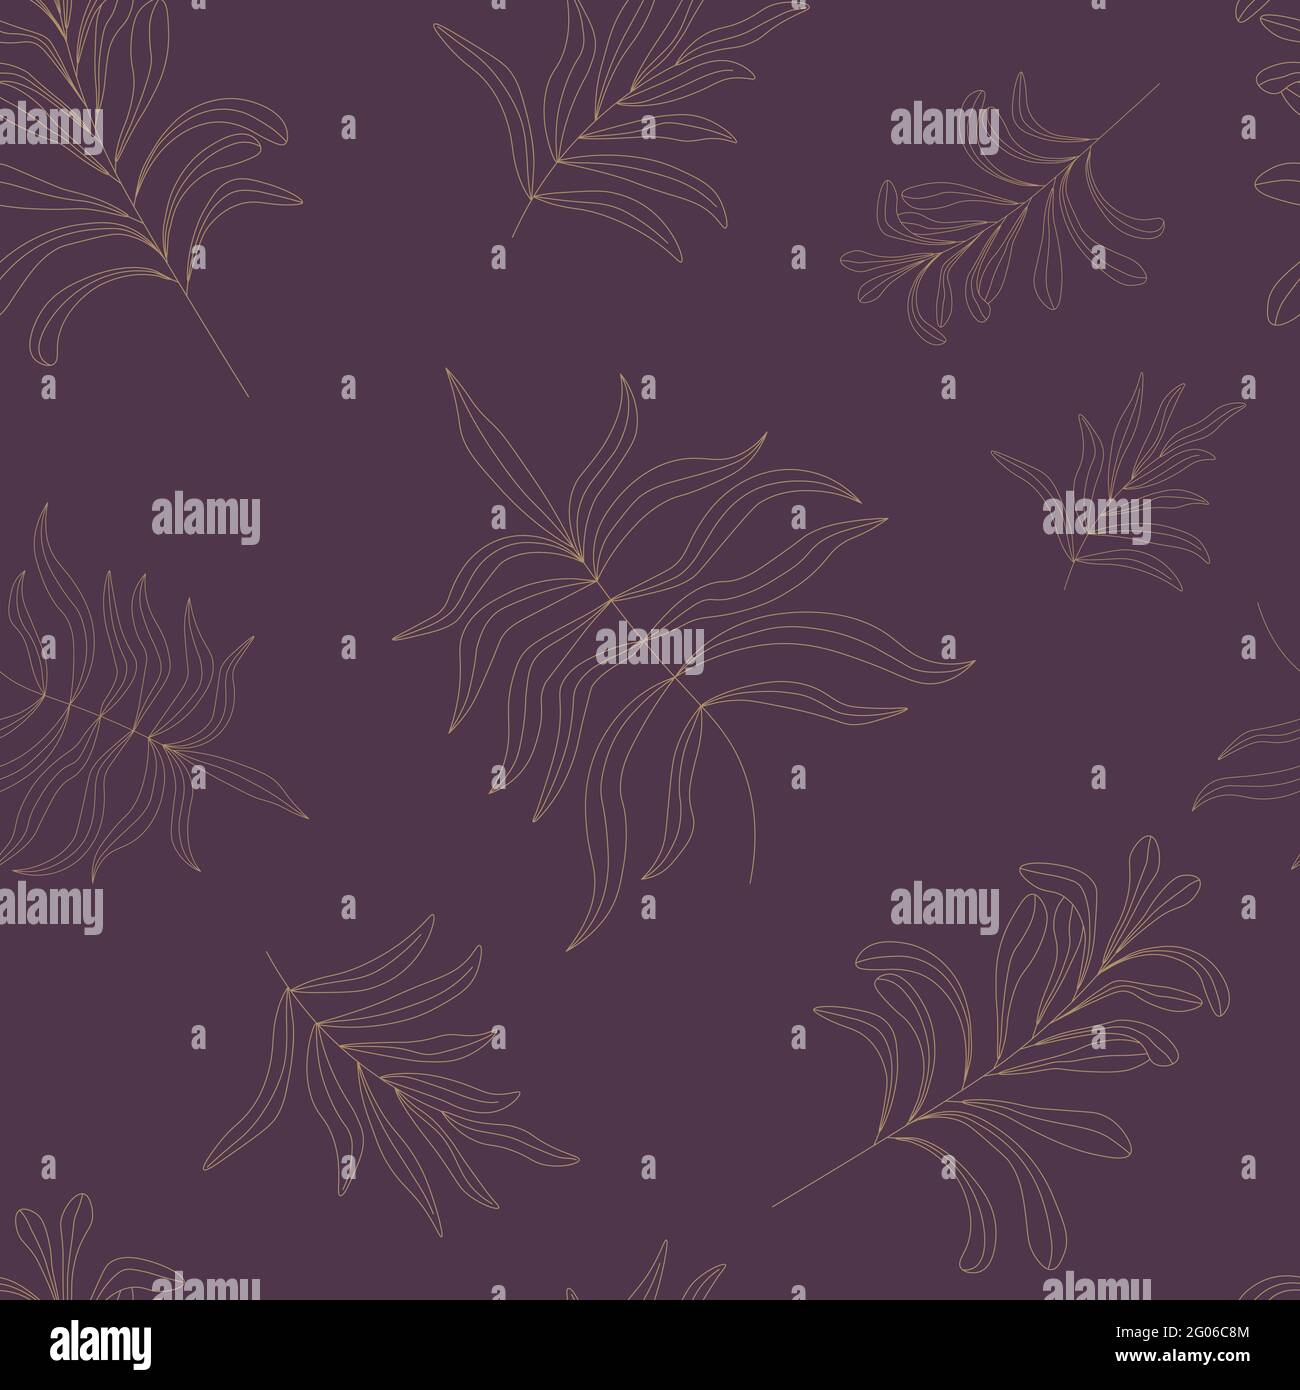 Seamless pattern of golden leaves on purple background. Elegant botanical vector illustration. Minimal floral pattern for textiles, fabric, wallpaper Stock Vector